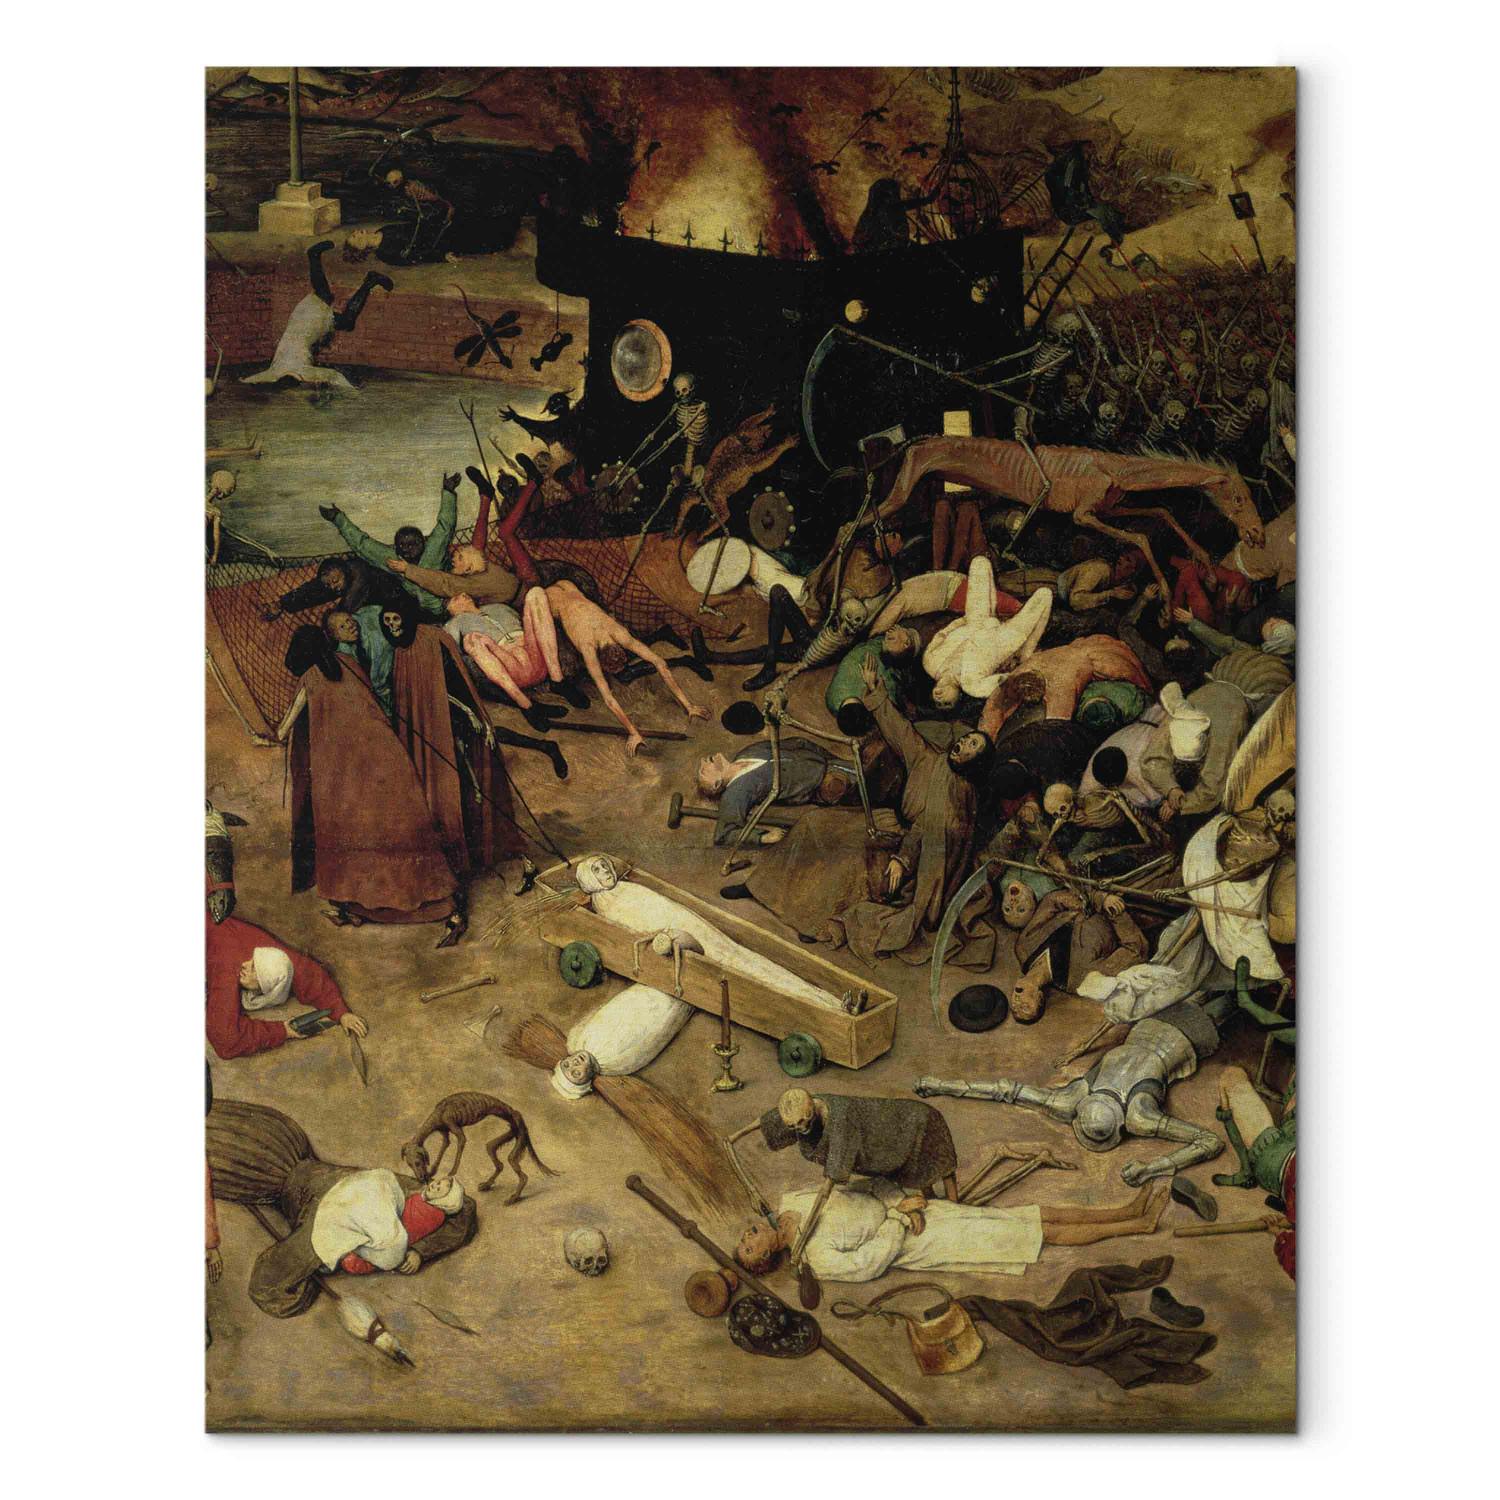 Reproducción de cuadro Triumph of Death, detail of the central section